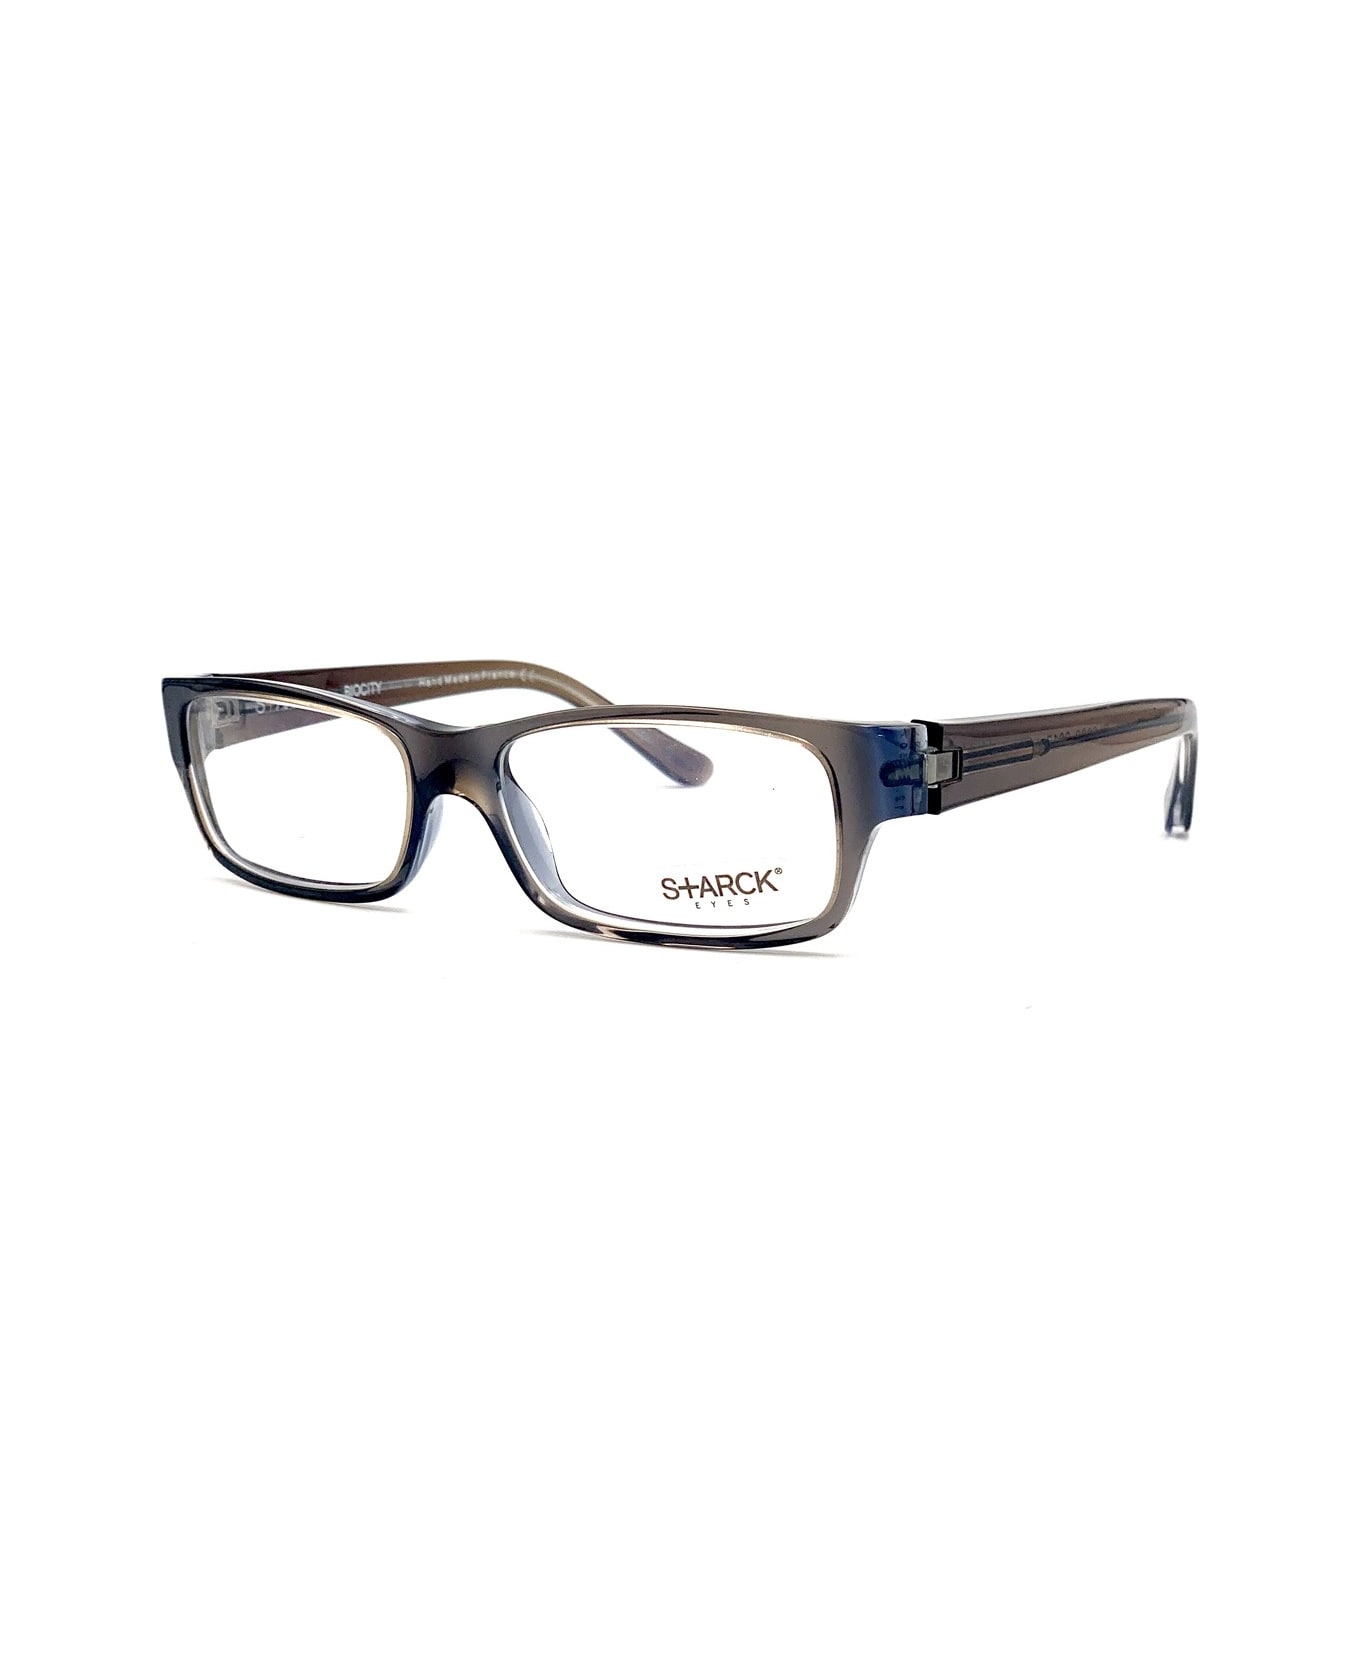 Philippe Starck Pl 0809 Glasses - Grigio アイウェア